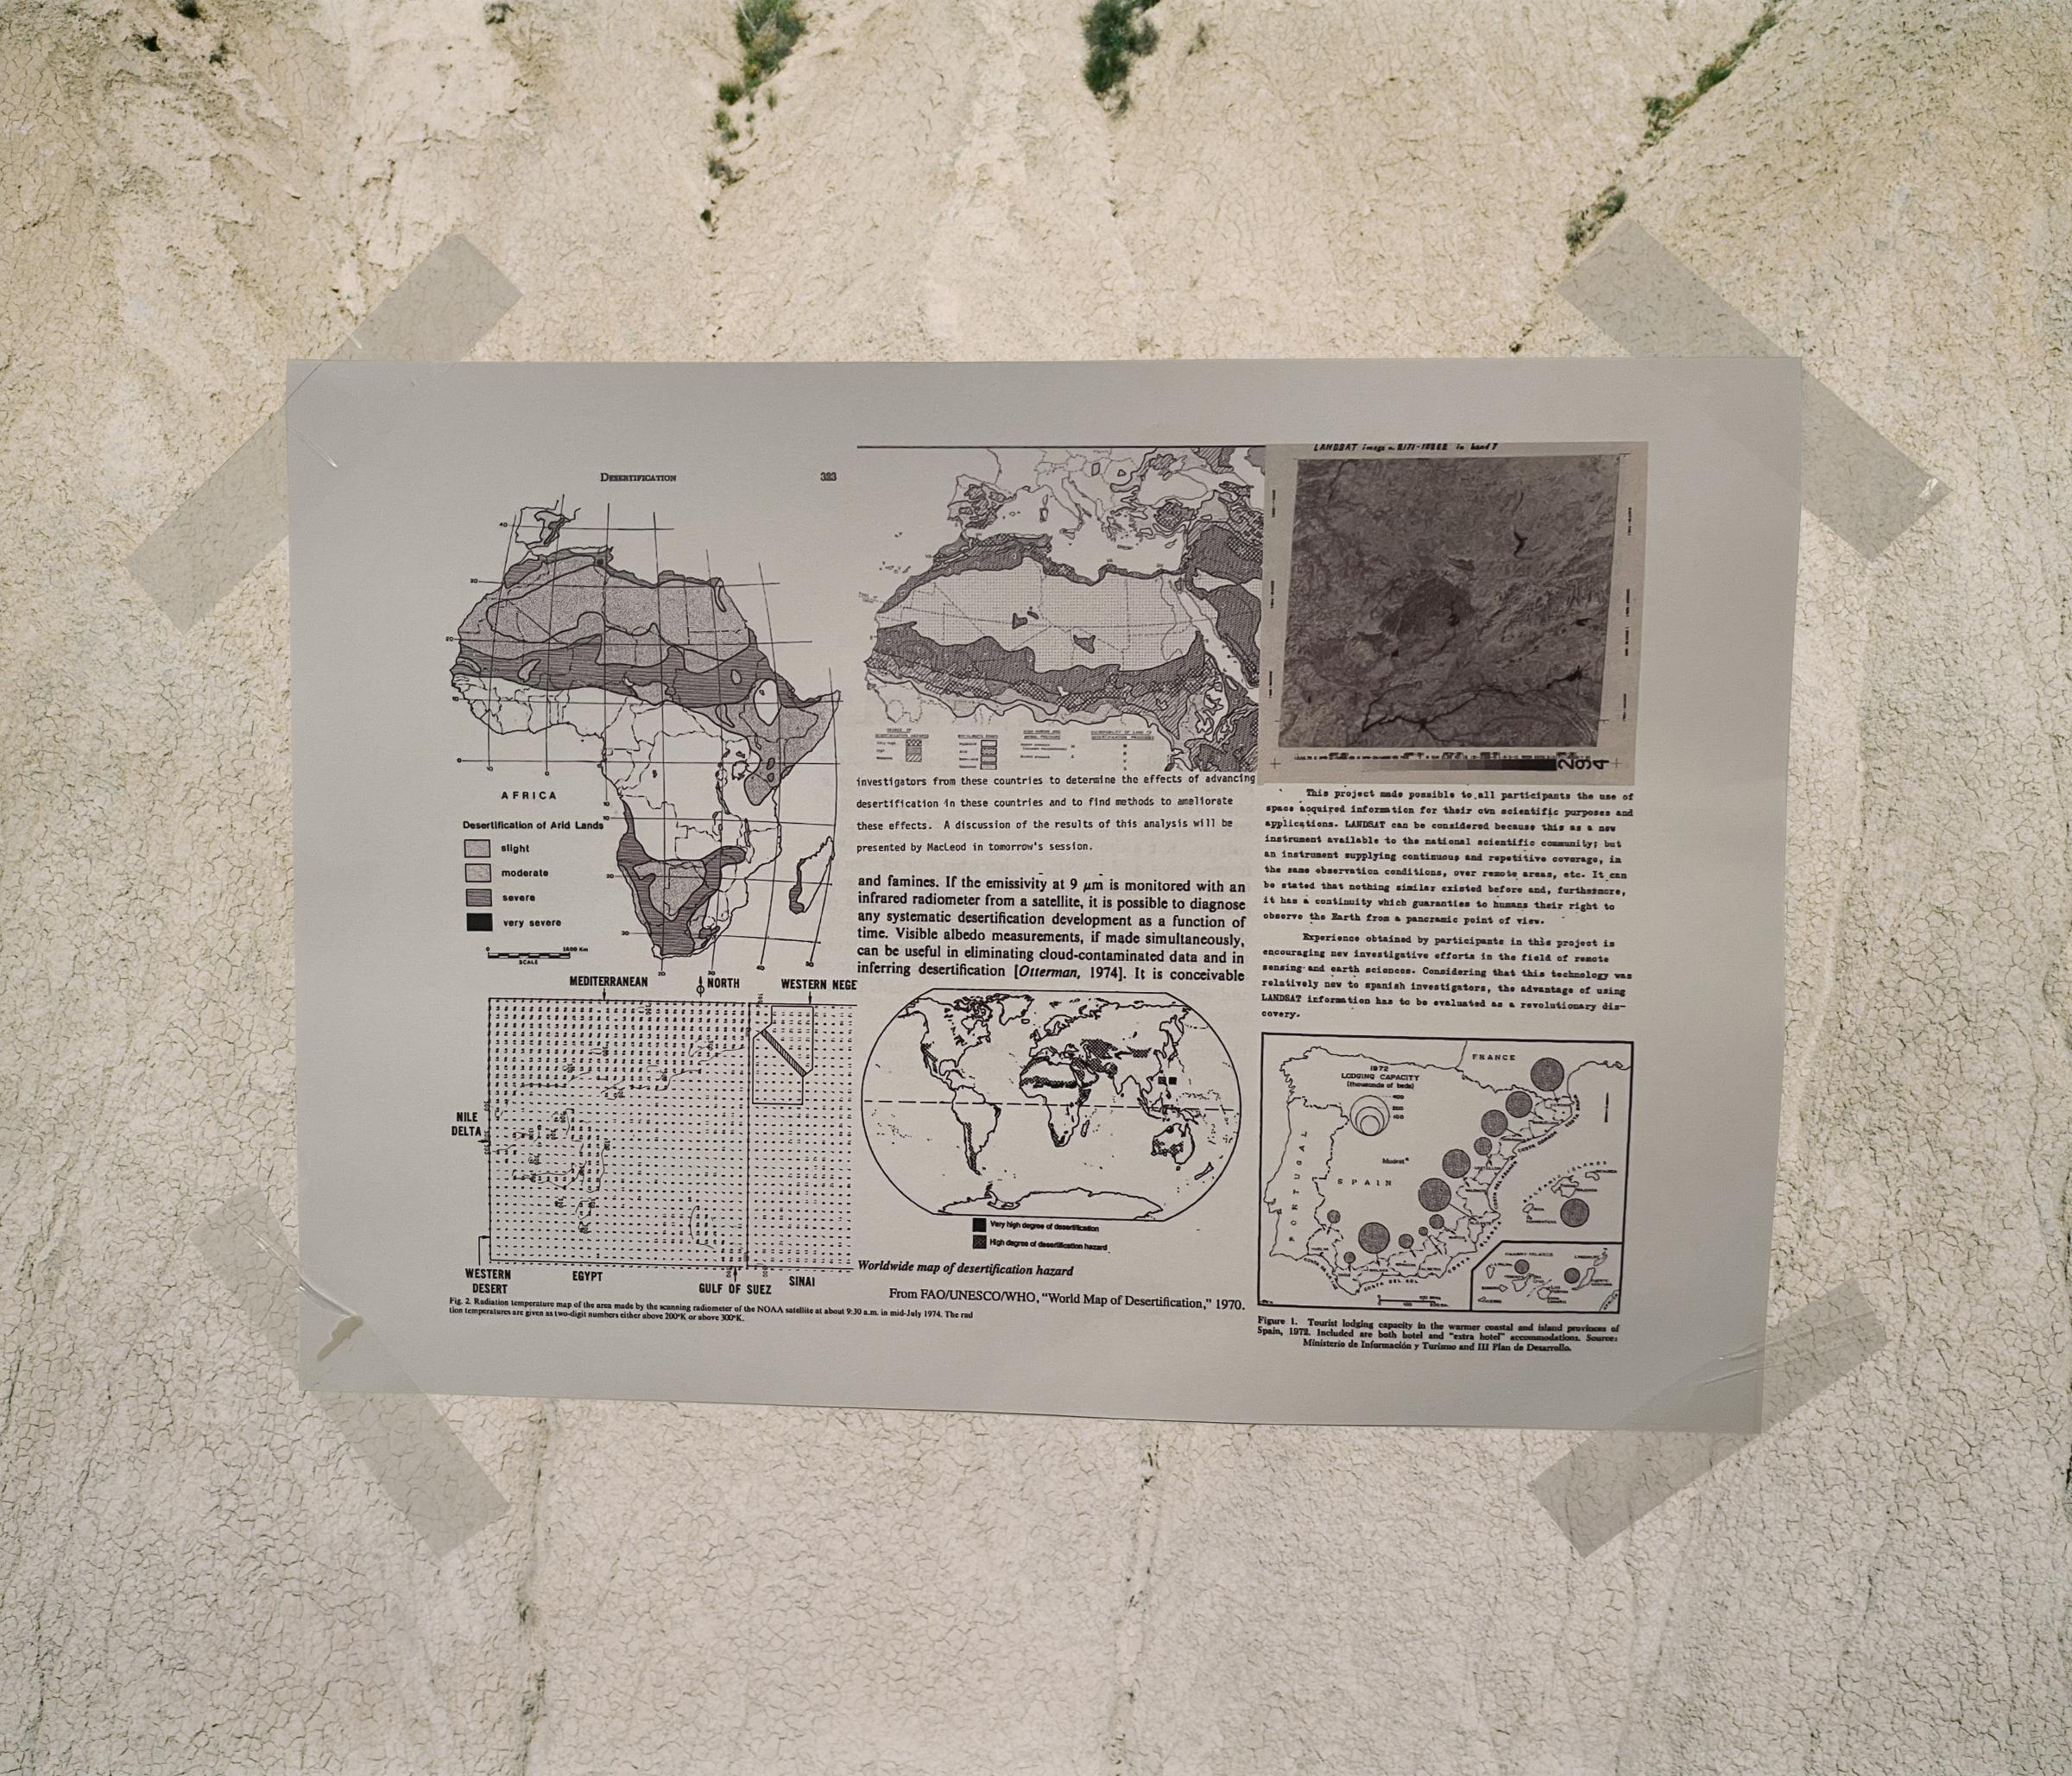 Eroding Franco (Árida) - Archives: Former scientific maps showing desertification...